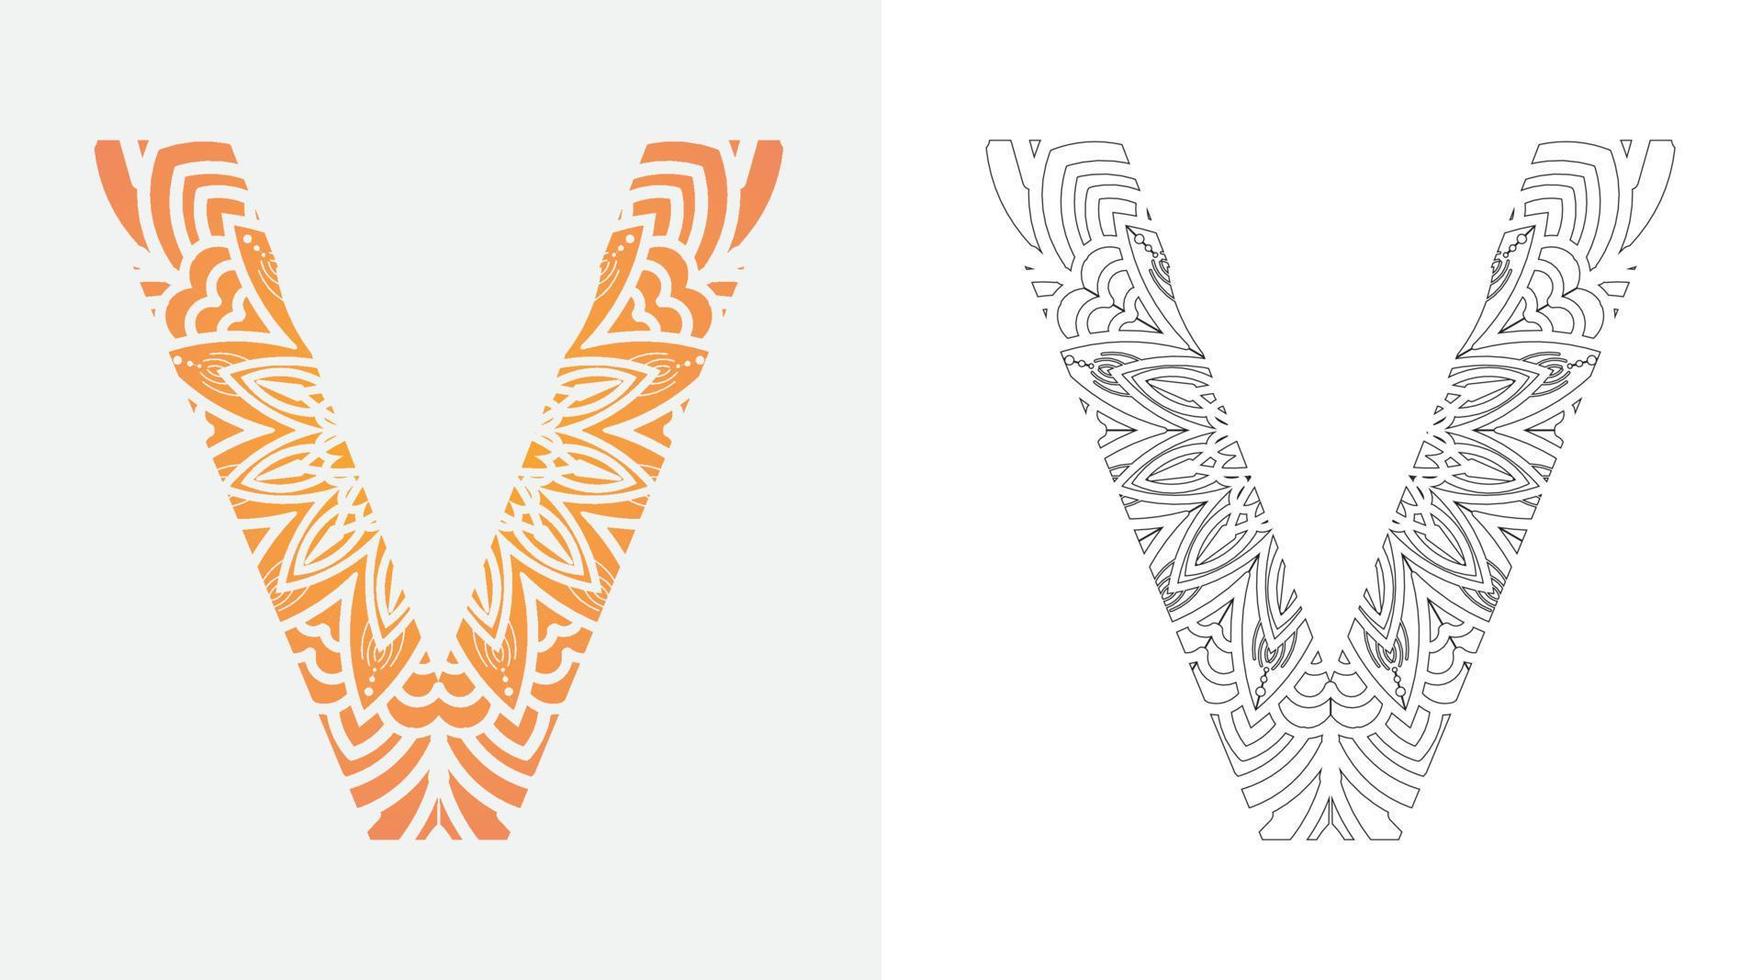 alfabet letter v pop-art, mandala kleuren ornamenten ontwerp vector